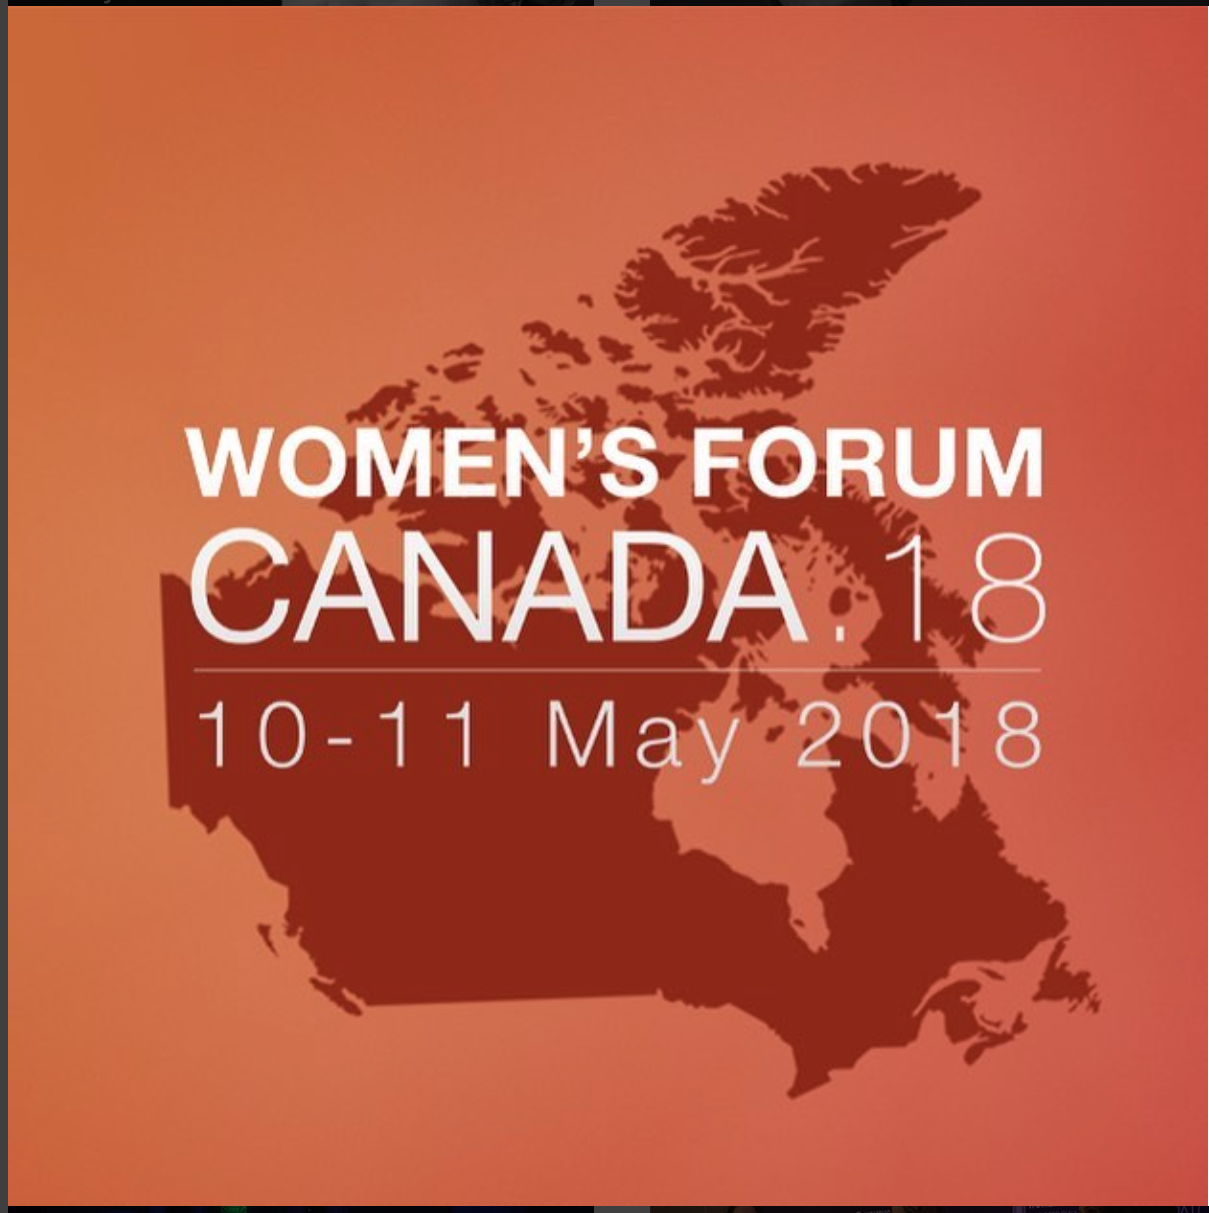 Women's Forum Canada 2018 - Elvis & Kresse